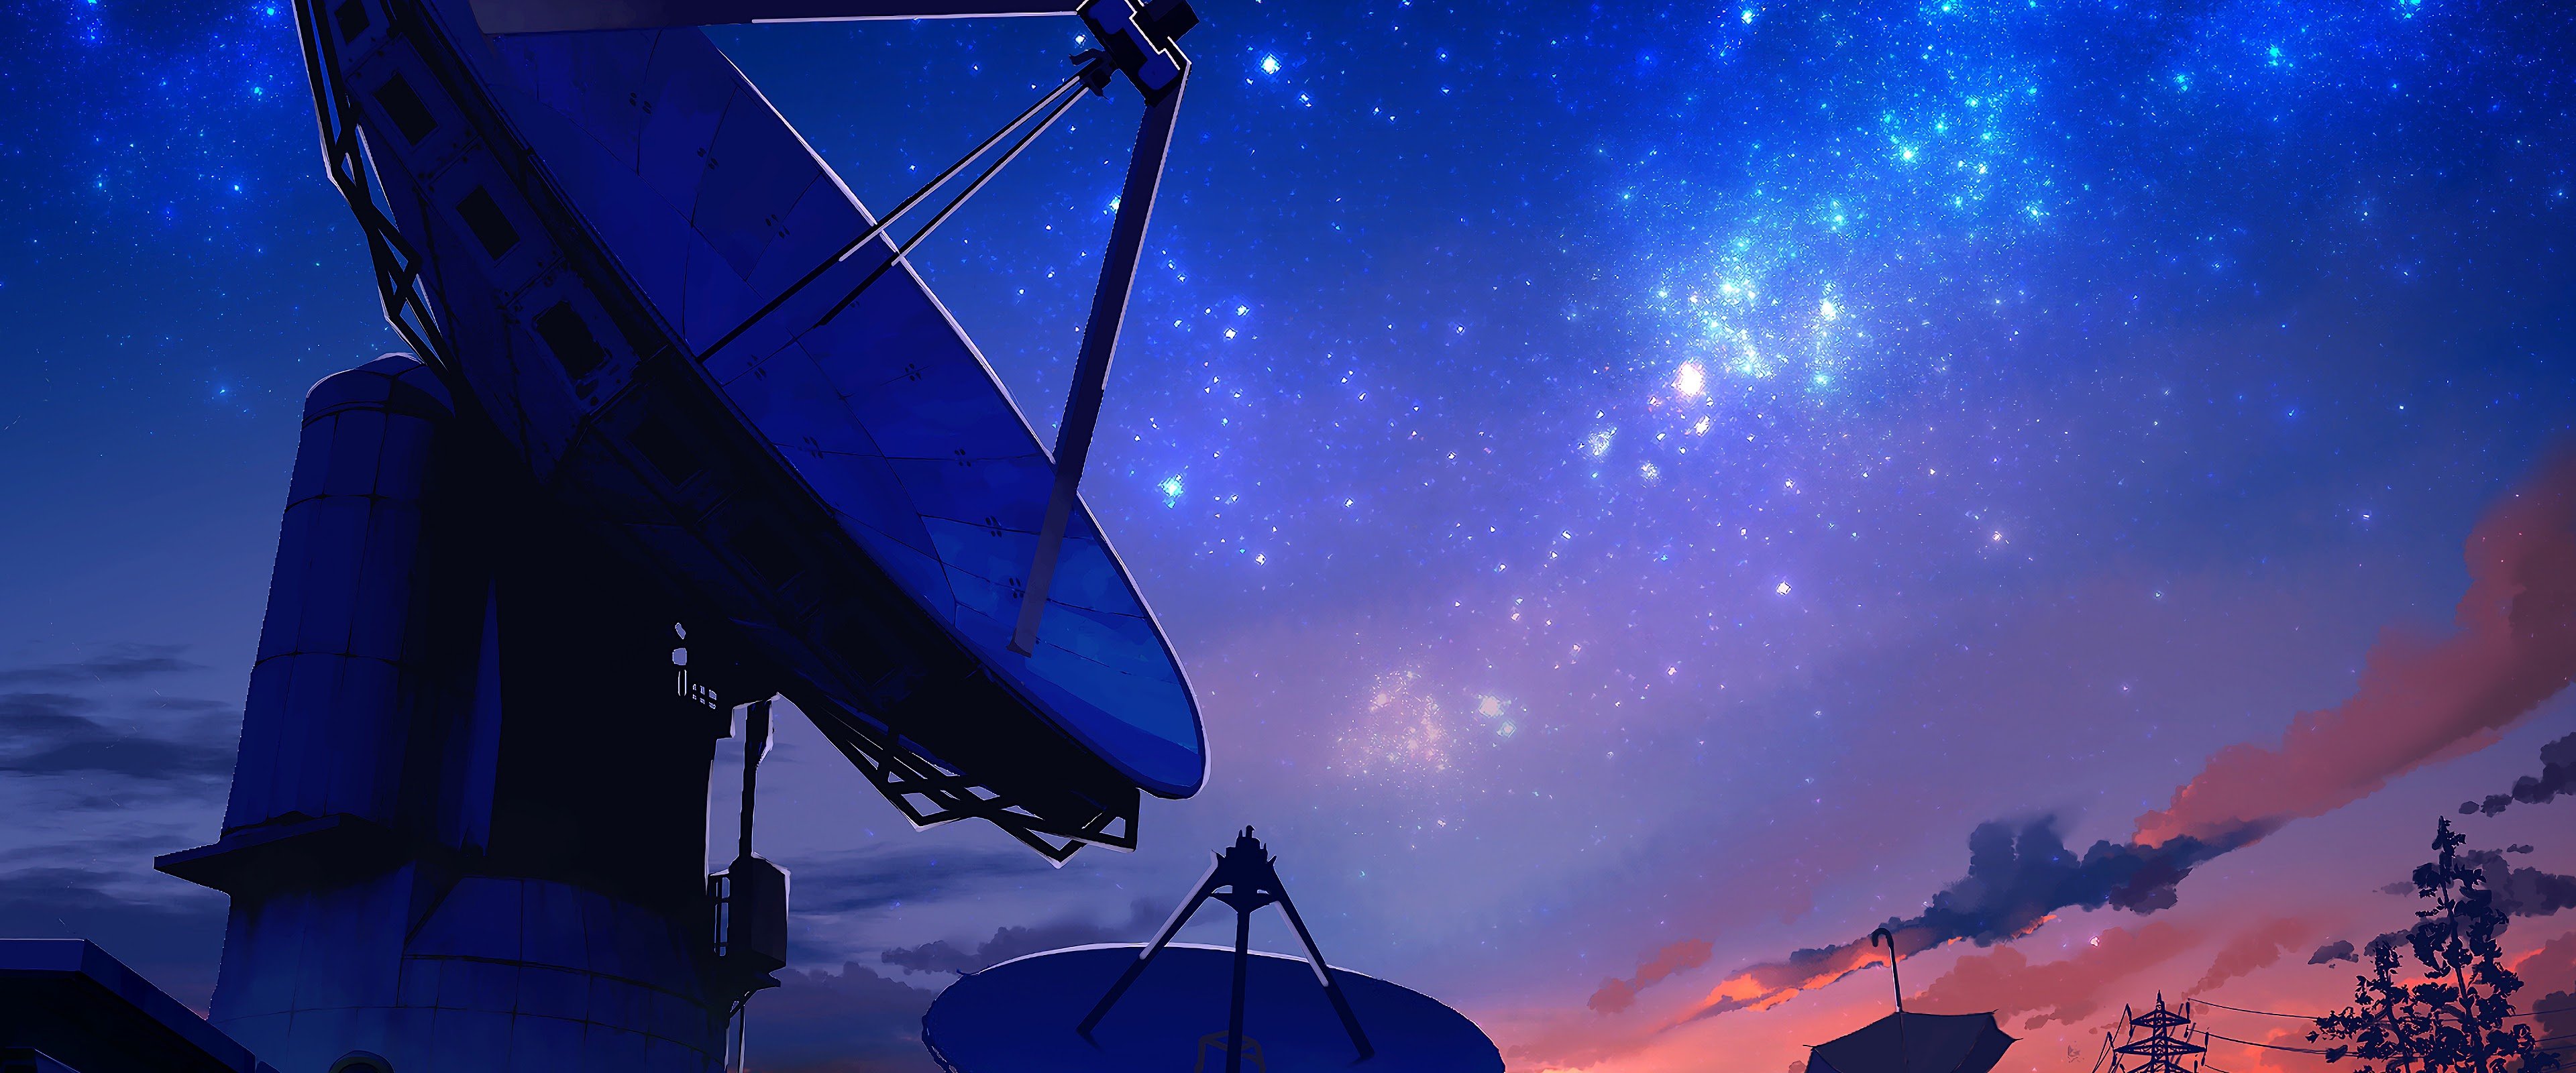 Anime Scenery Night Sky Satellite Dish PC DeskK Wallpaper free Download